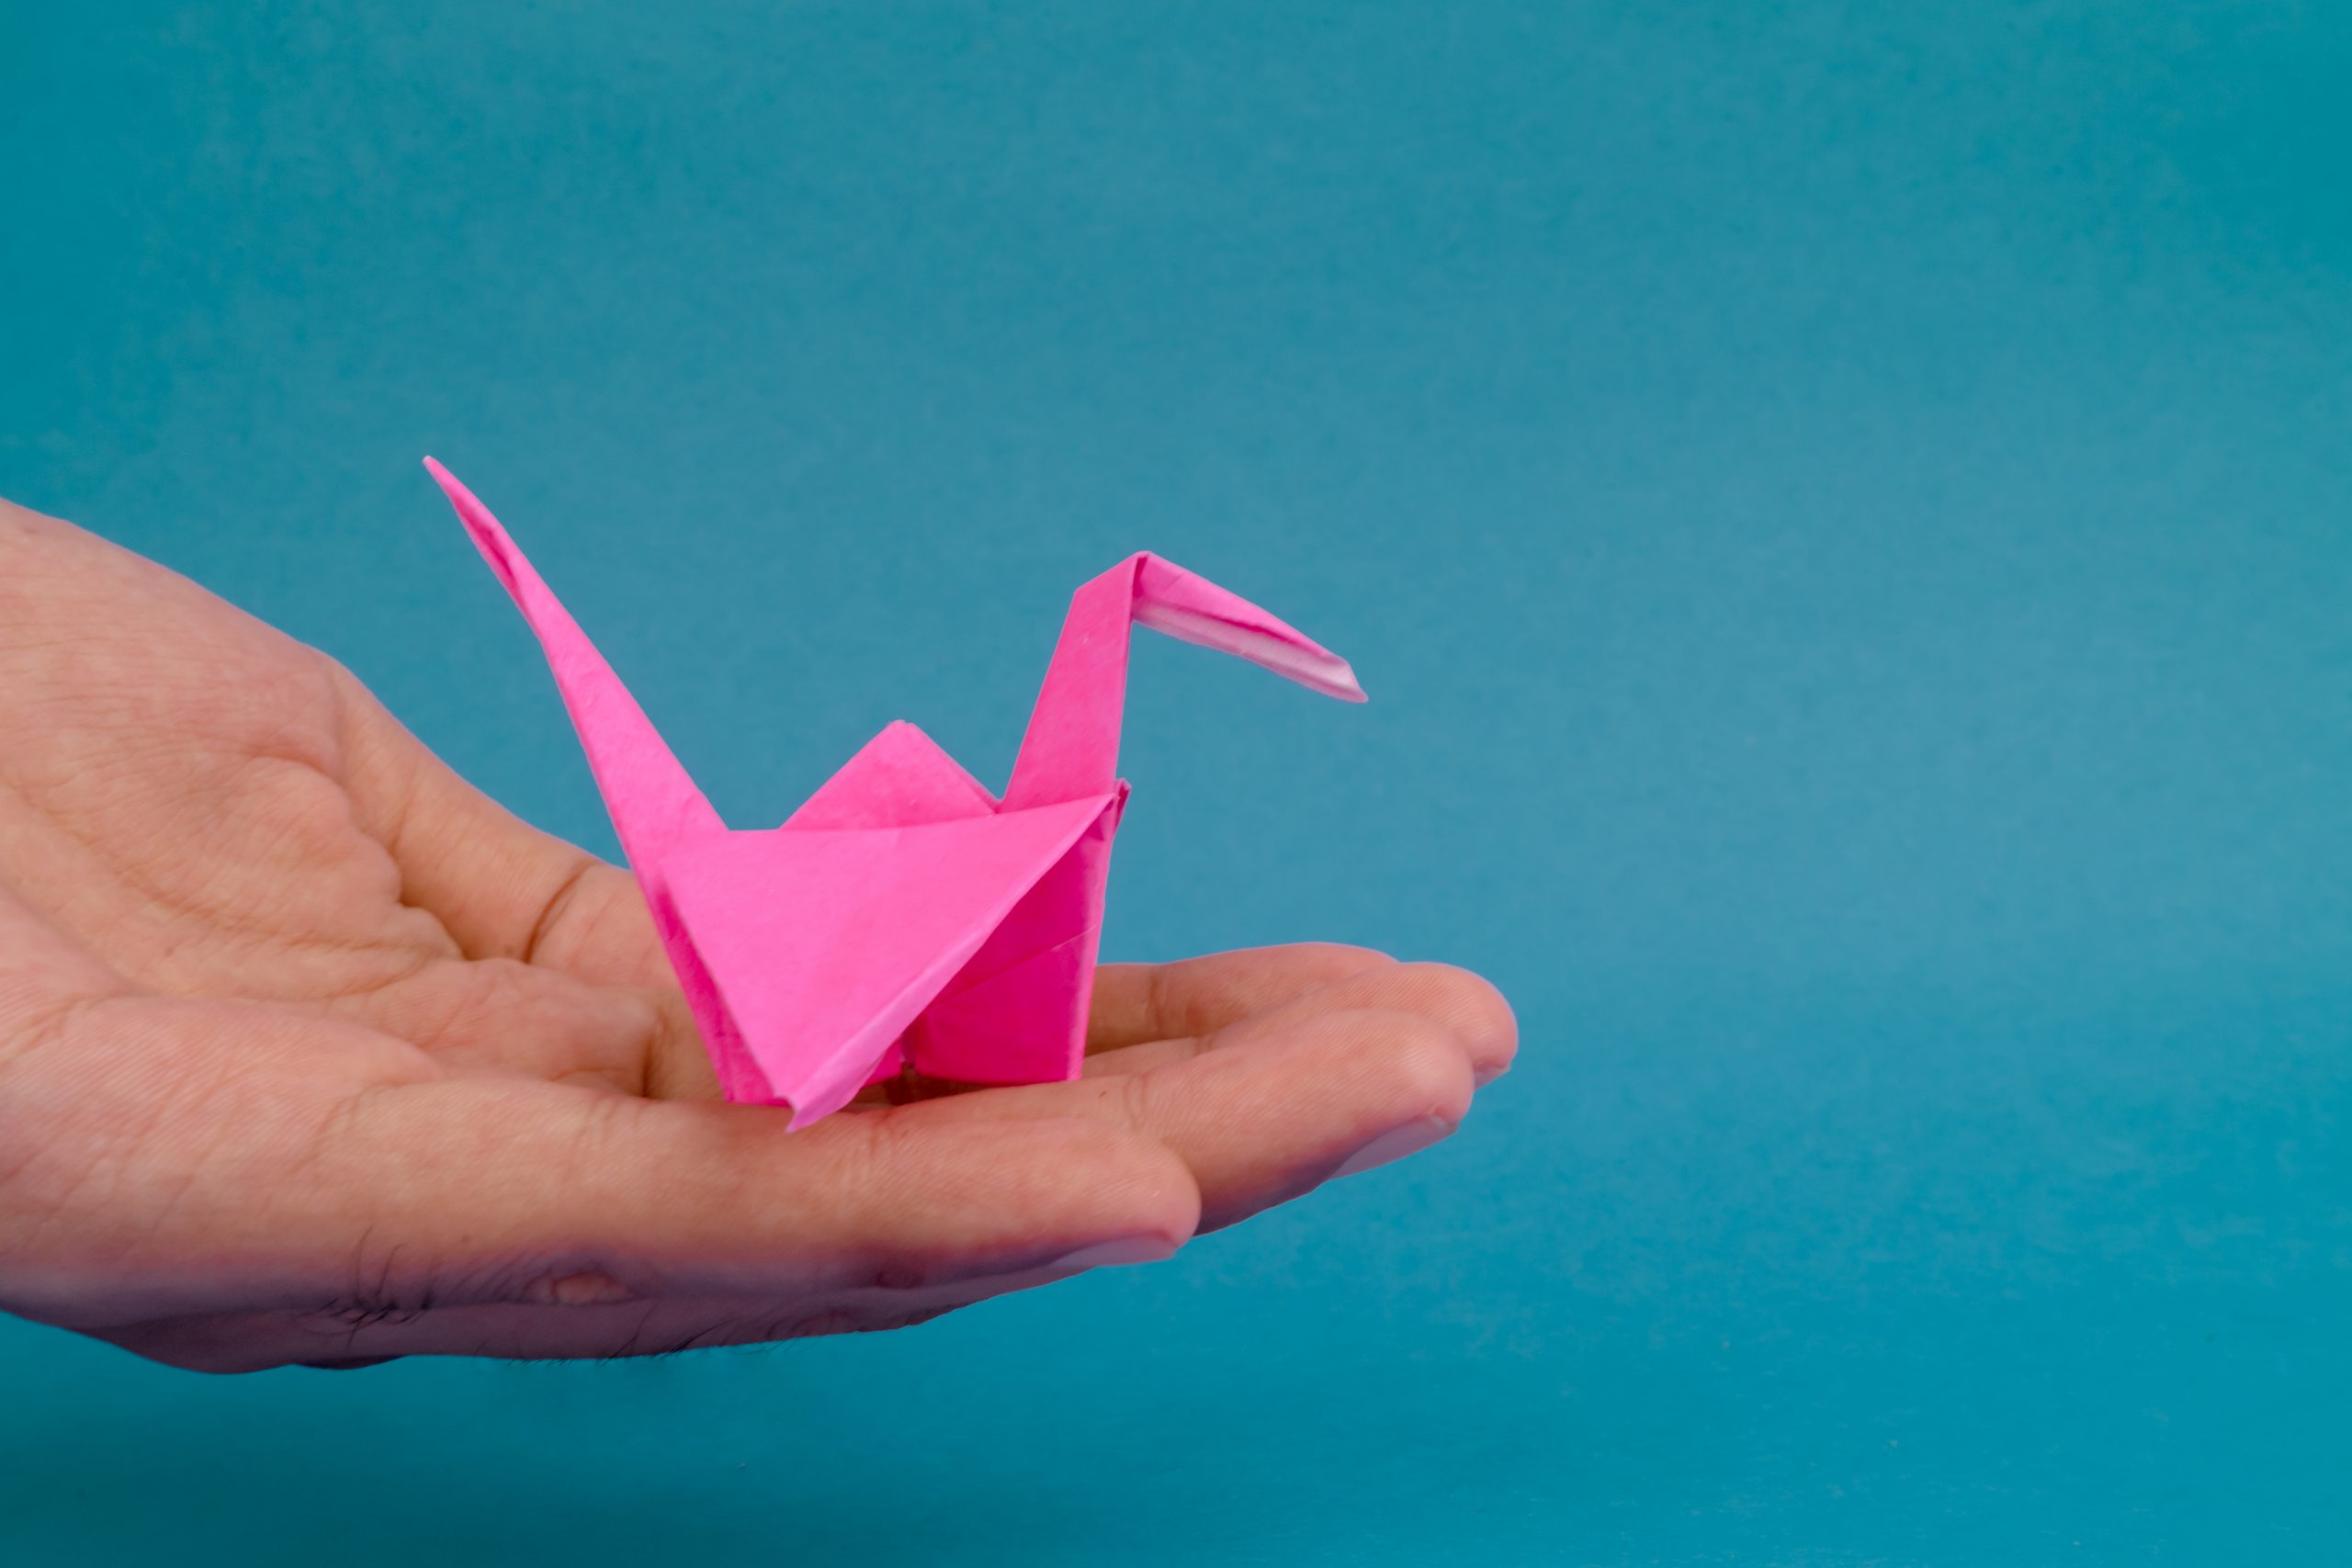 Origami crane in hand